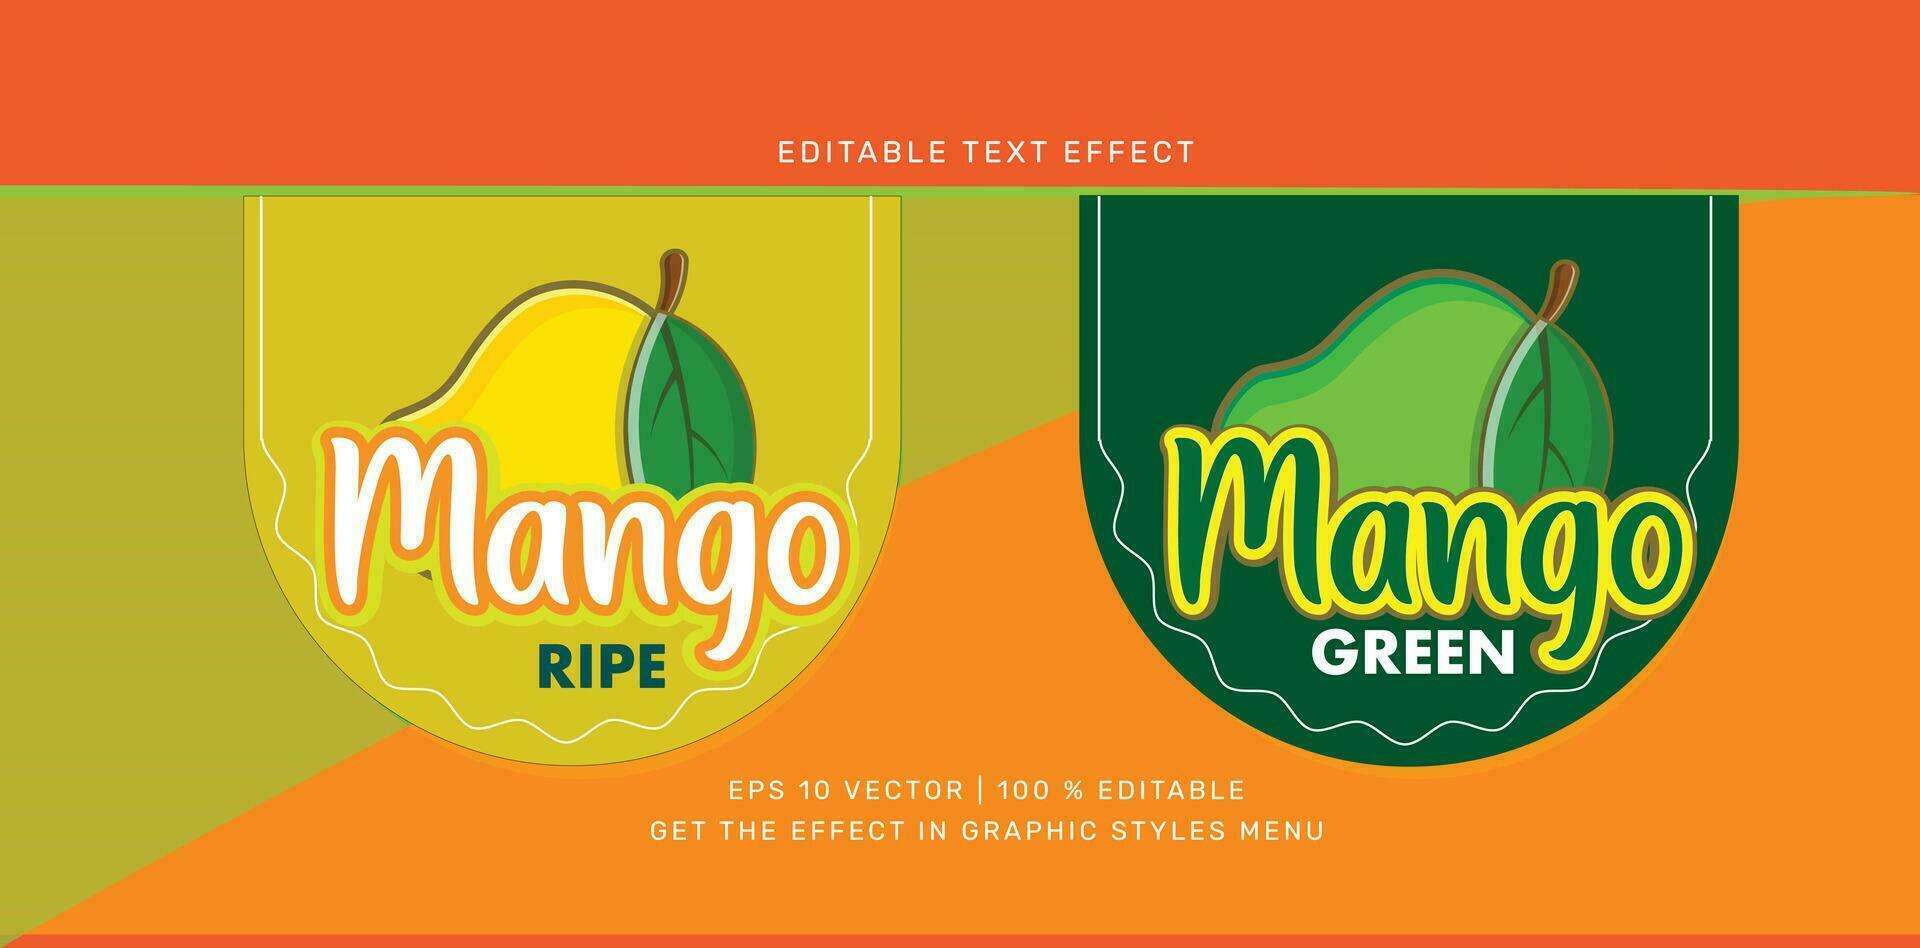 mango text and logo editable vector